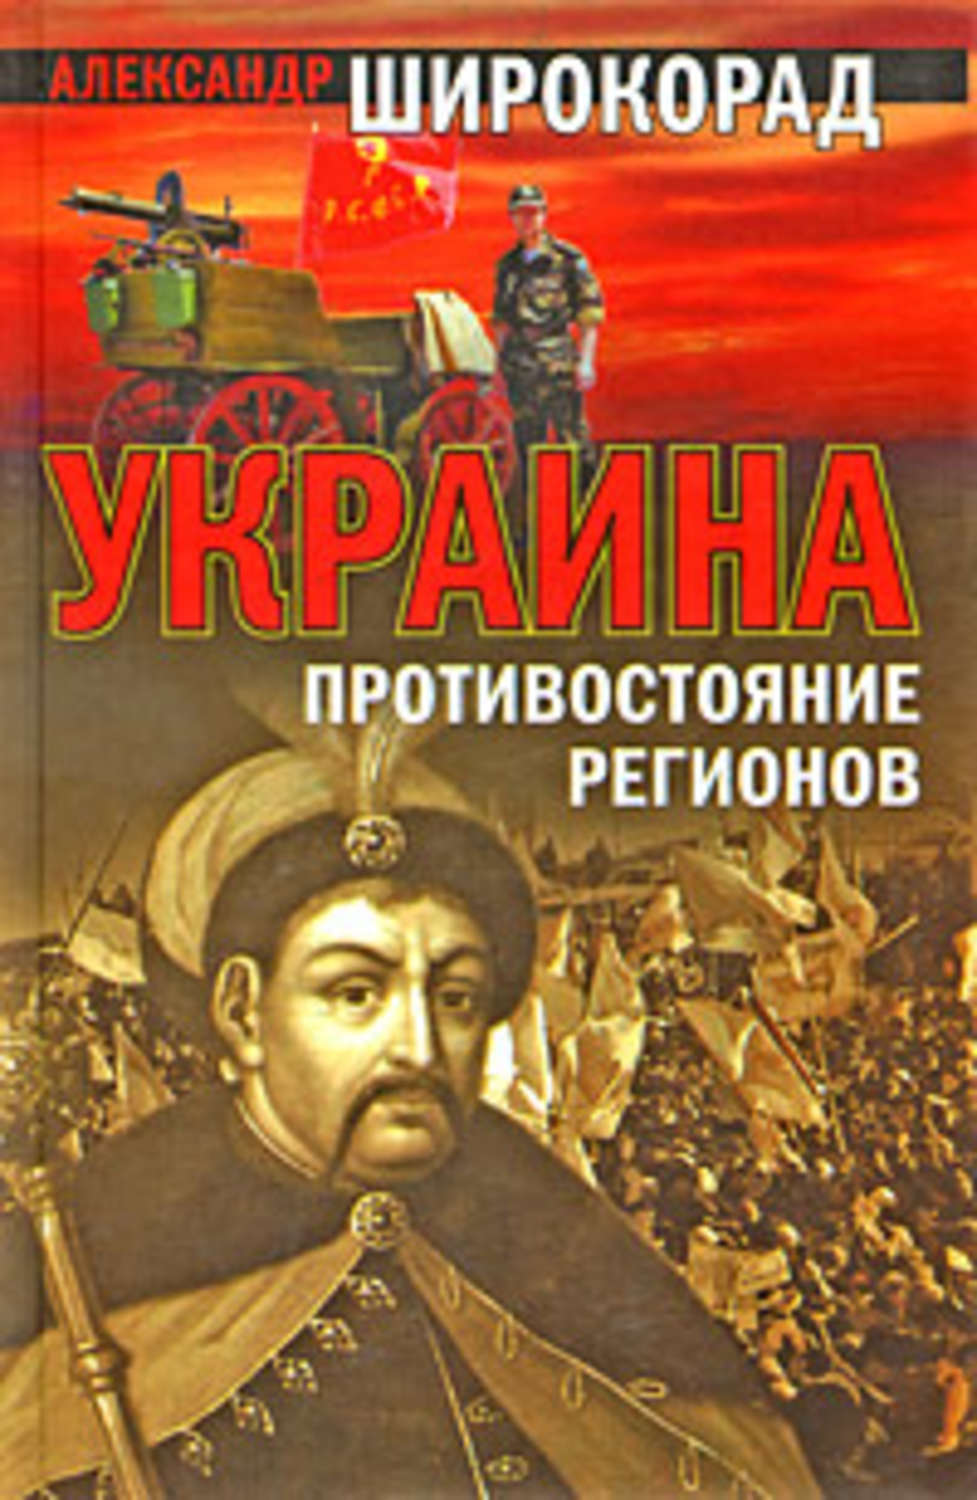 Широкорад книги. Широкорад Украина Противостояние регионов. Книга про Украину.